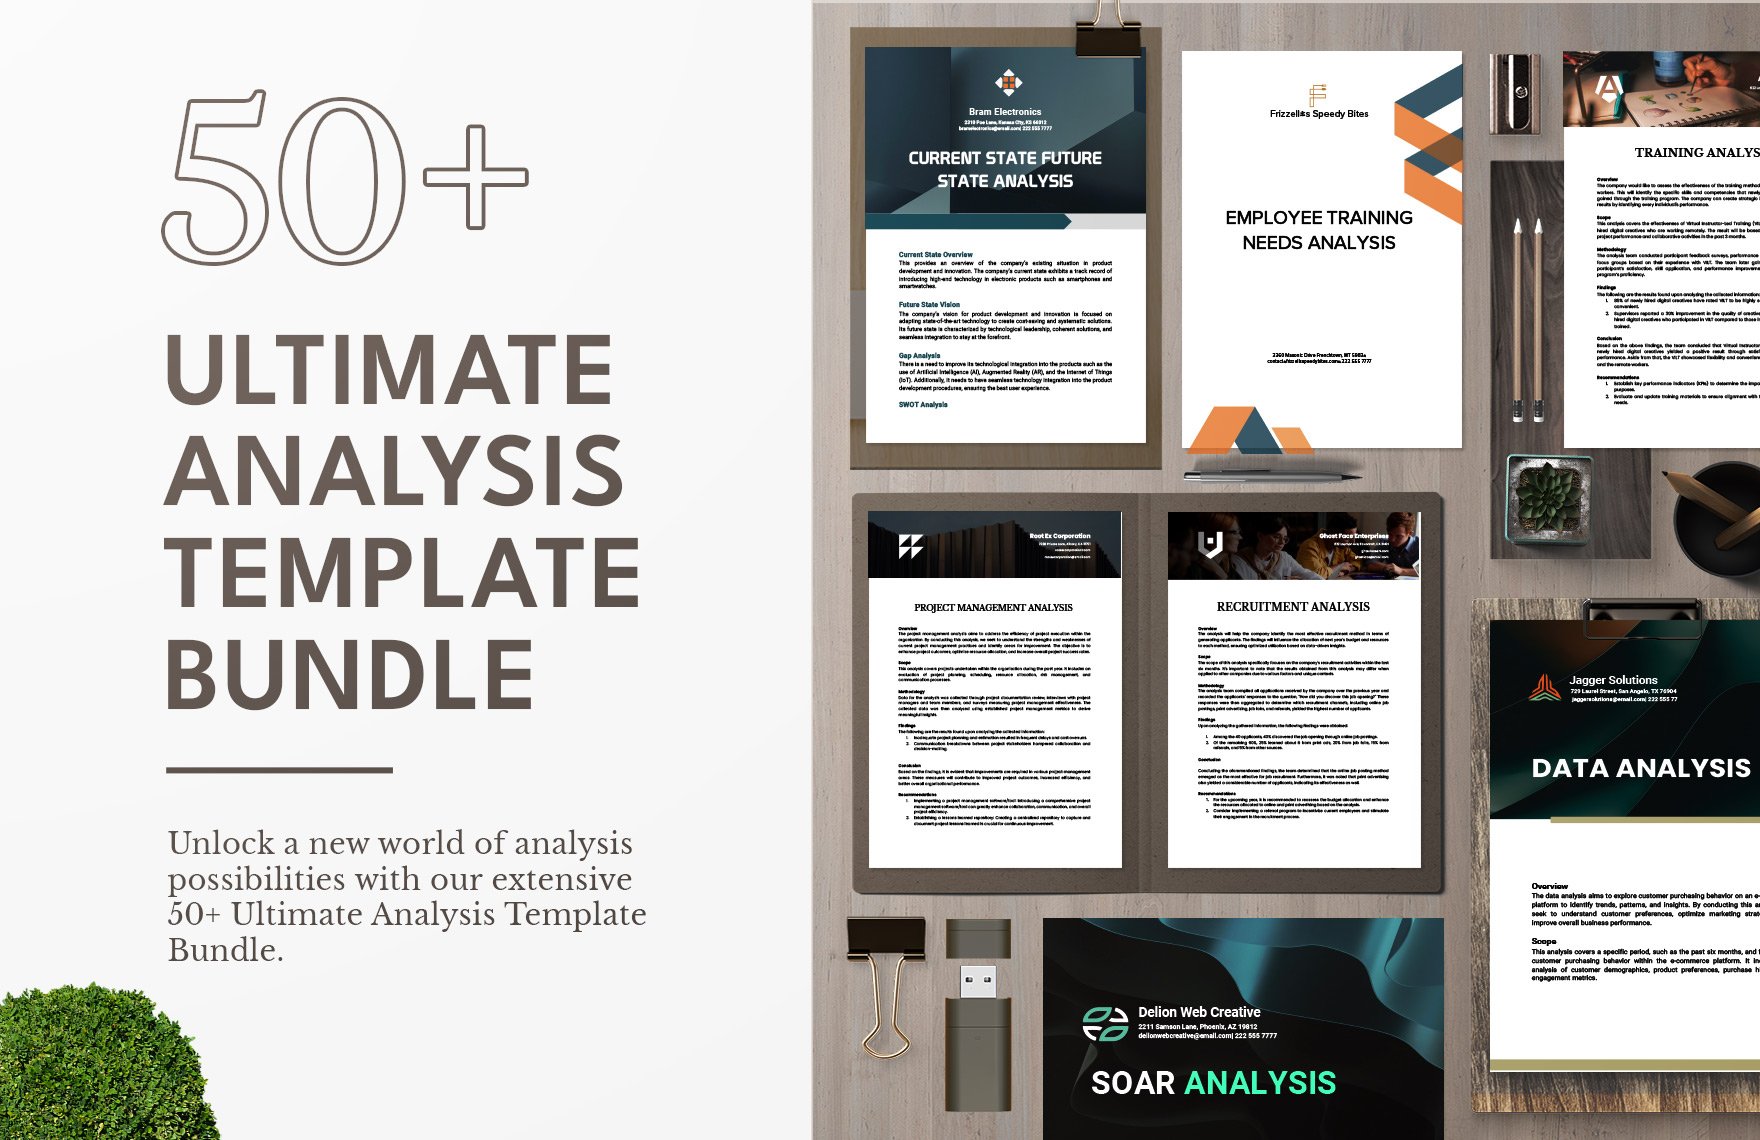 50+ Ultimate Analysis Template Bundle